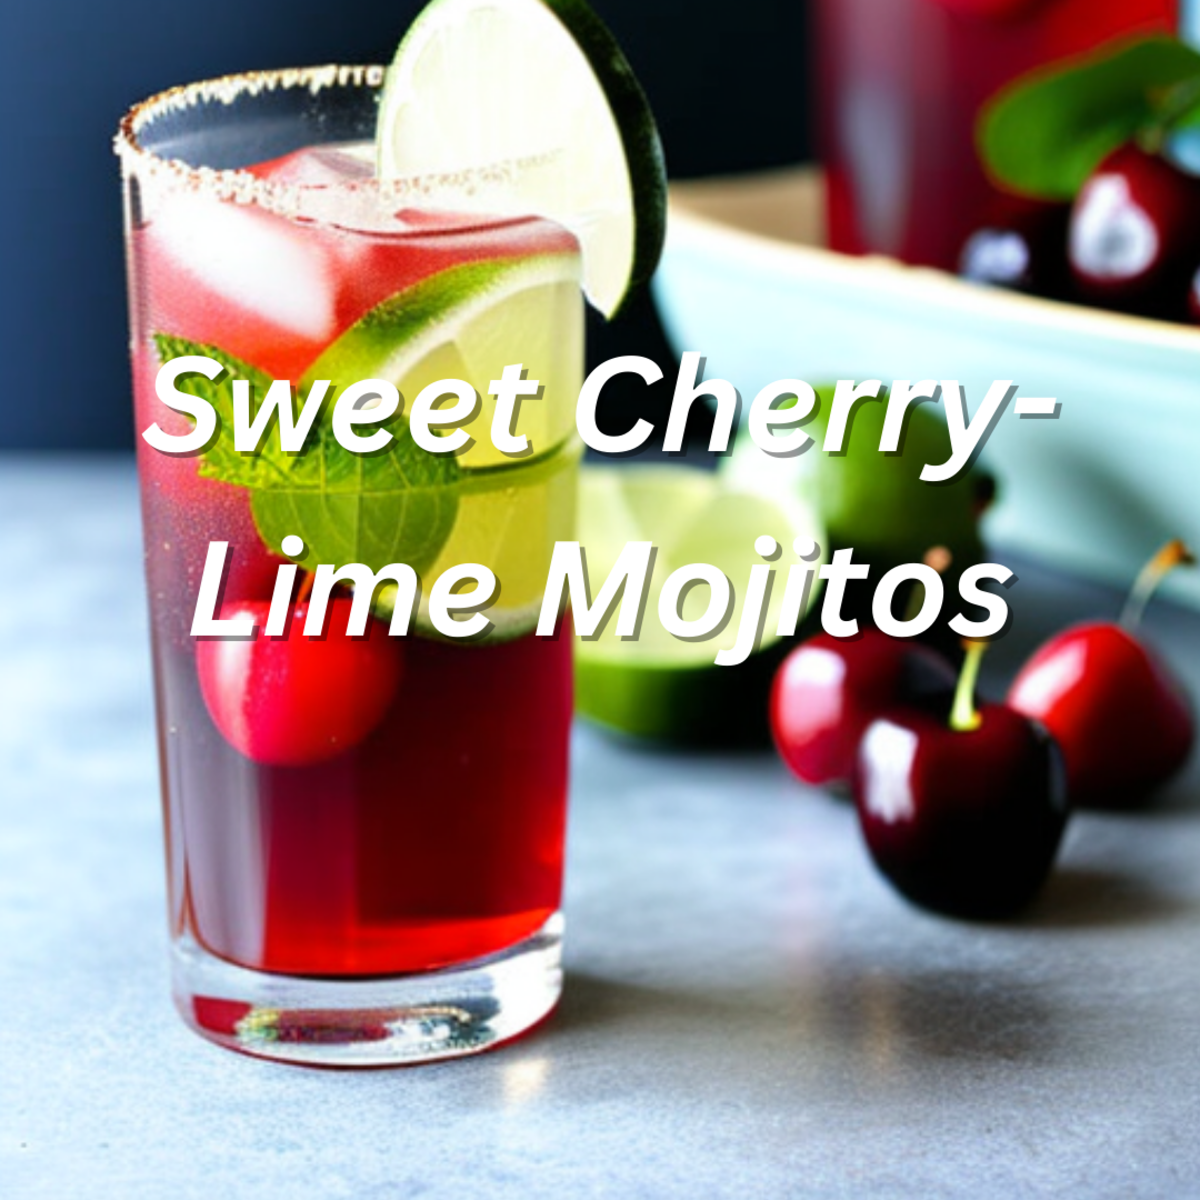 Sweet Cherry Lime Mojitos